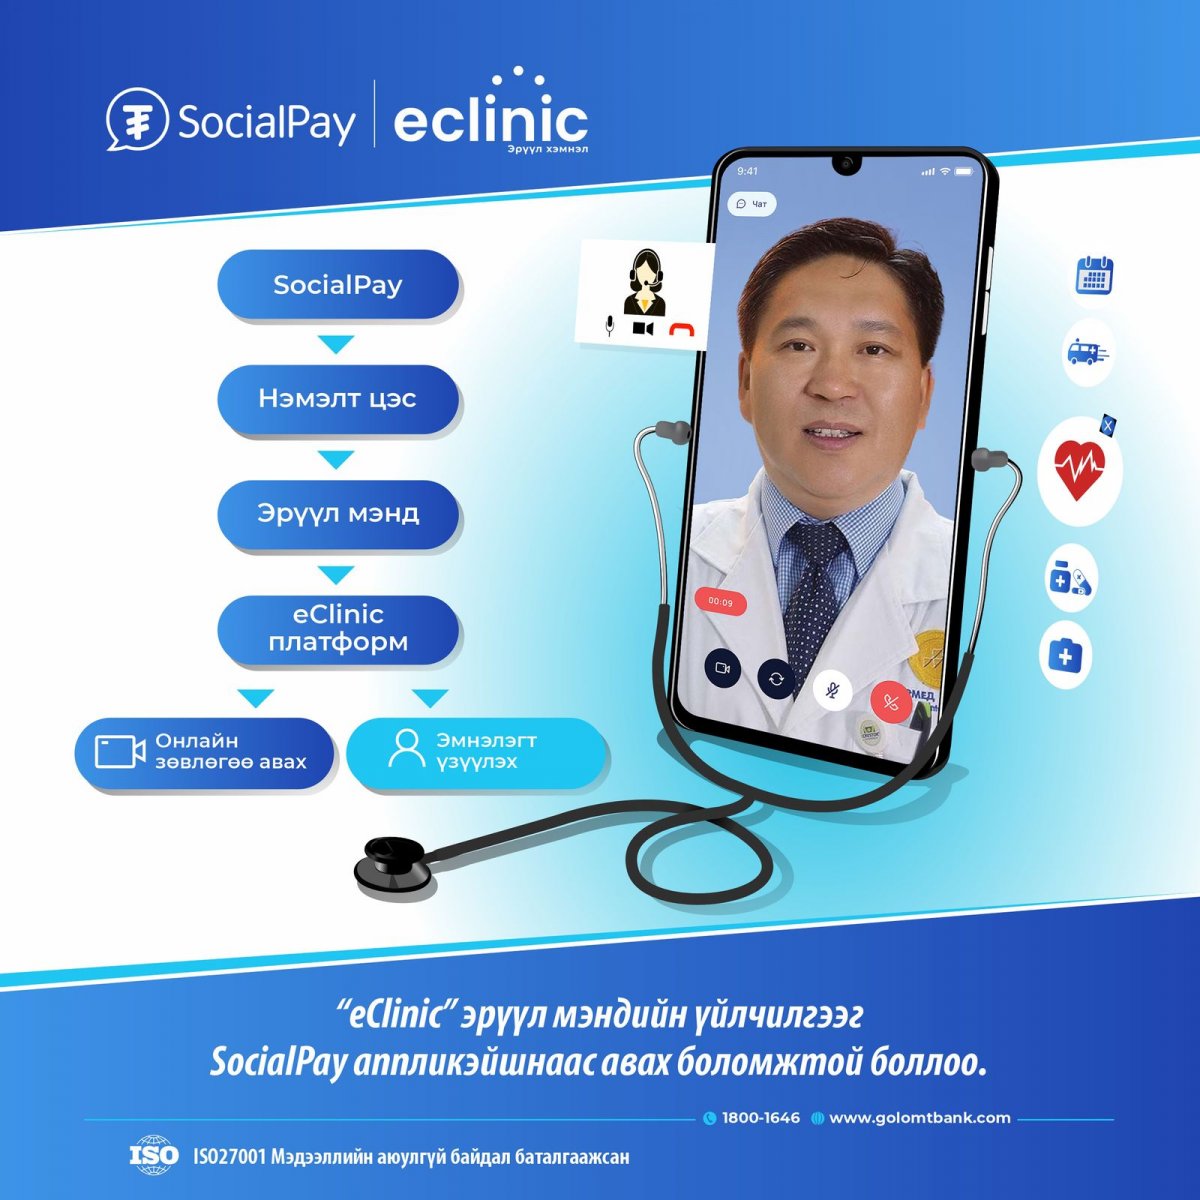 Eclinic платформ SocialPay-д холбогдлоо